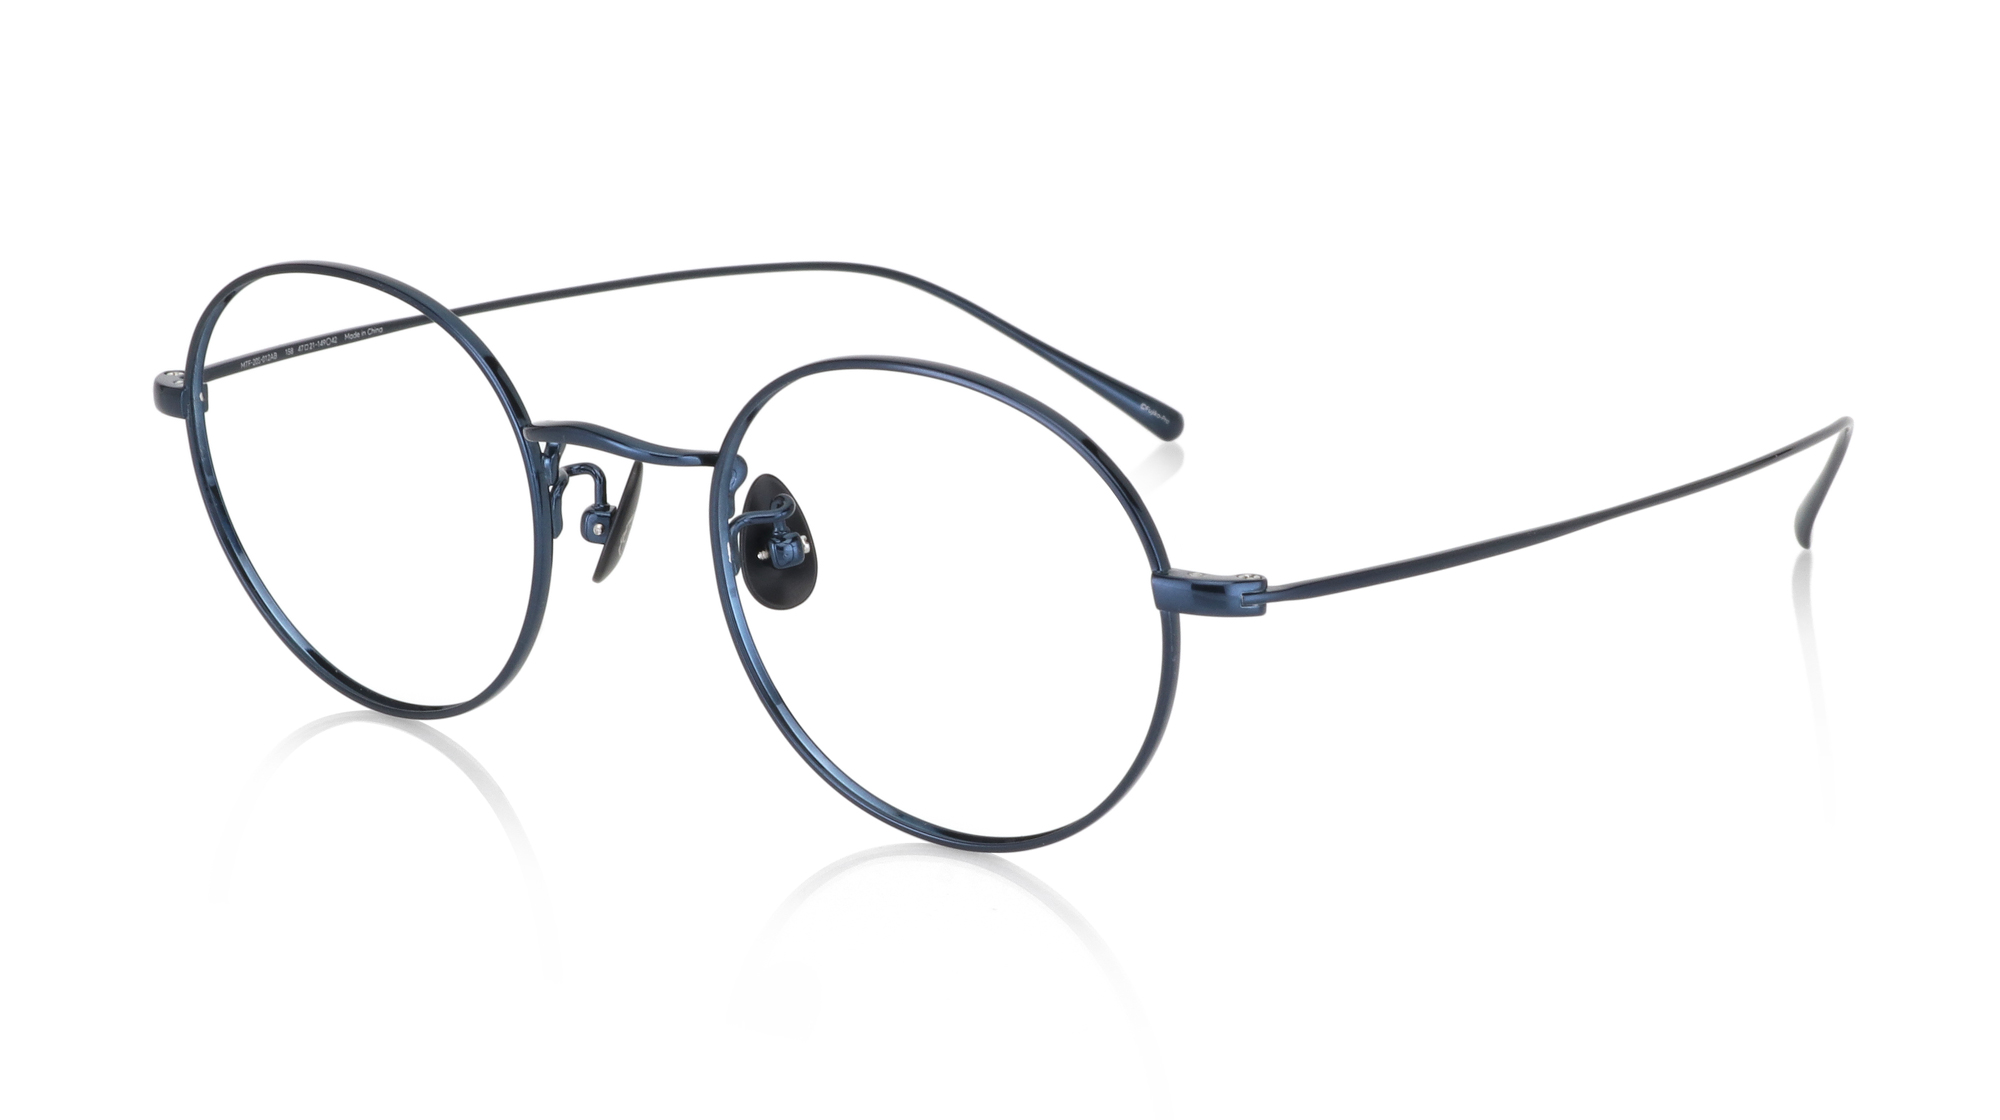 Jinsドラえもんモデル のび太 モデル Mtf s 012 158 商品詳細 Jins 眼鏡 メガネ めがね メガネ のjins めがね 眼鏡